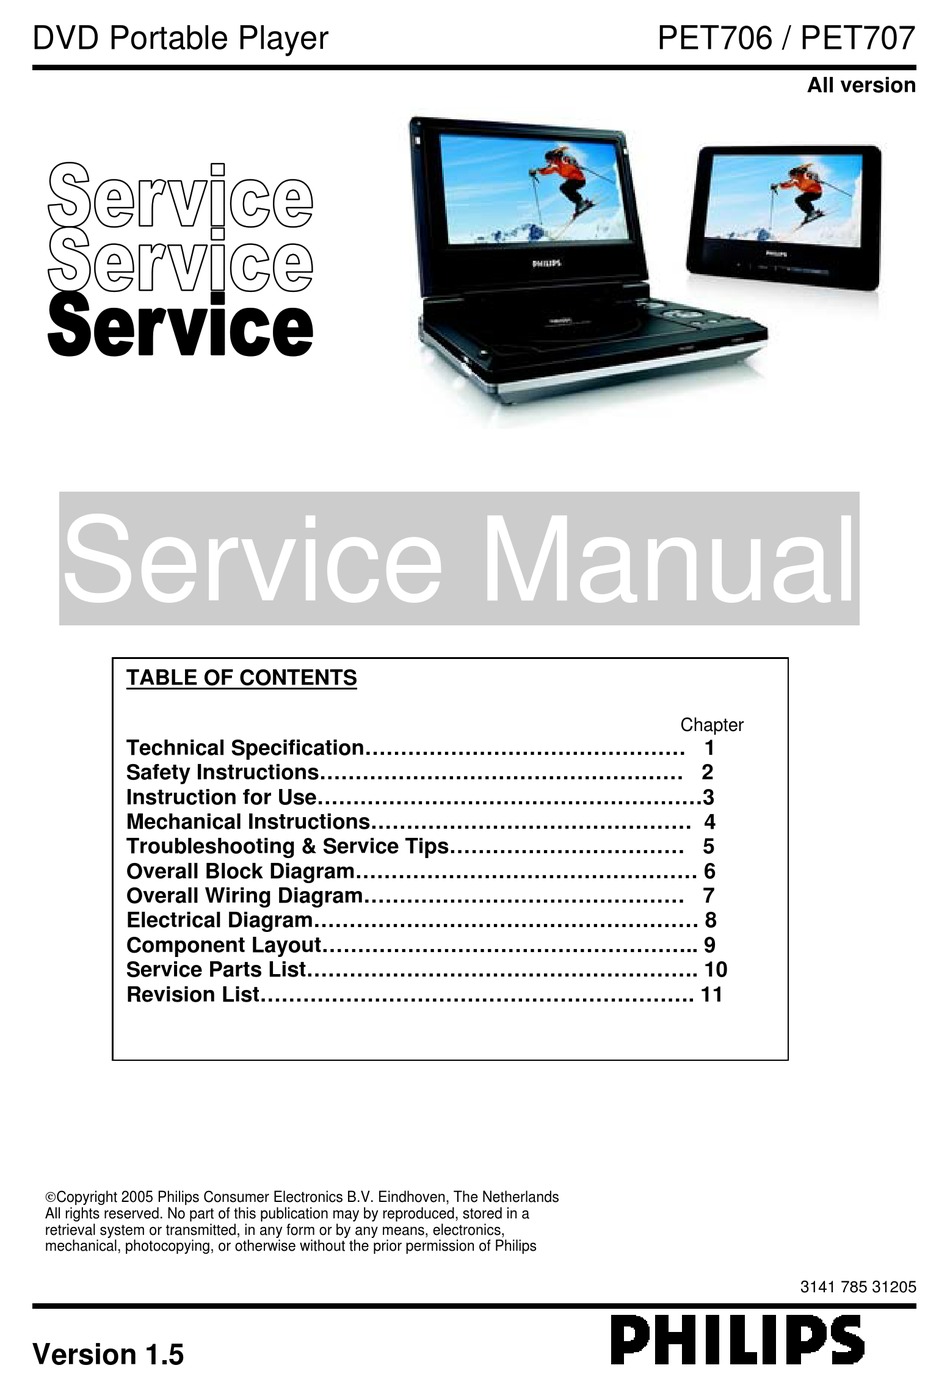 PHILIPS PET706 SERVICE MANUAL Pdf Download | ManualsLib